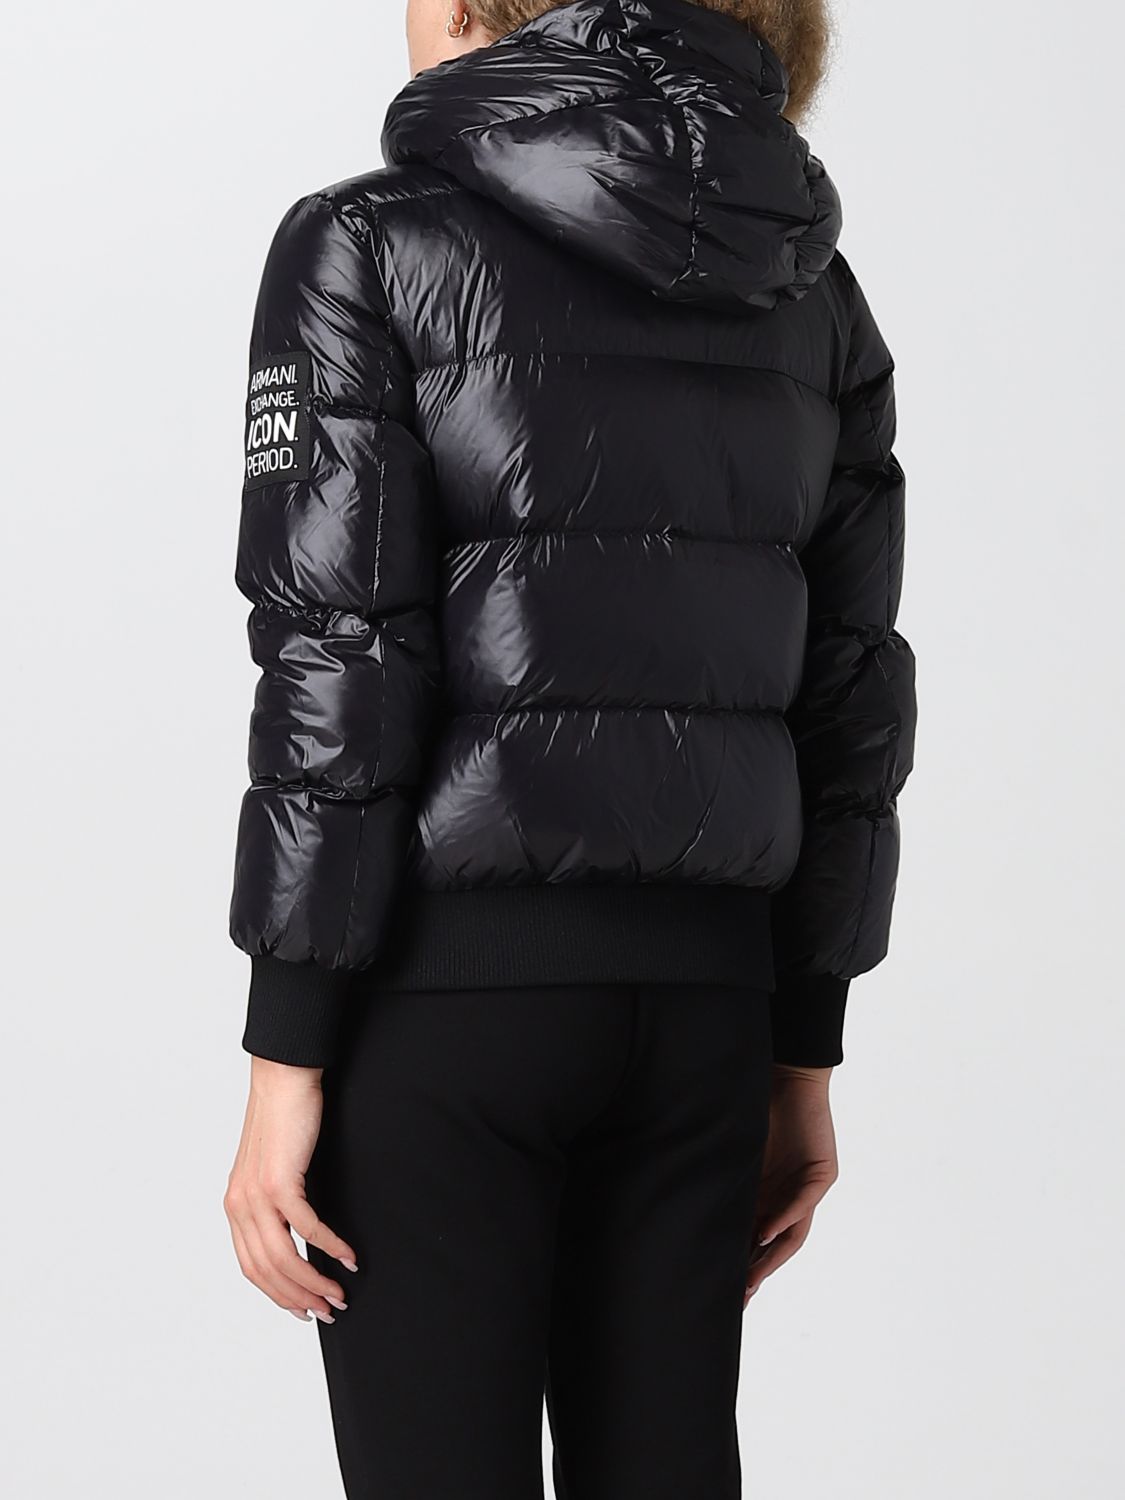 Kan niet ornament Gewond raken Armani Exchange Outlet: jacket for woman - Black | Armani Exchange jacket  8NYB40YNYNZ online on GIGLIO.COM